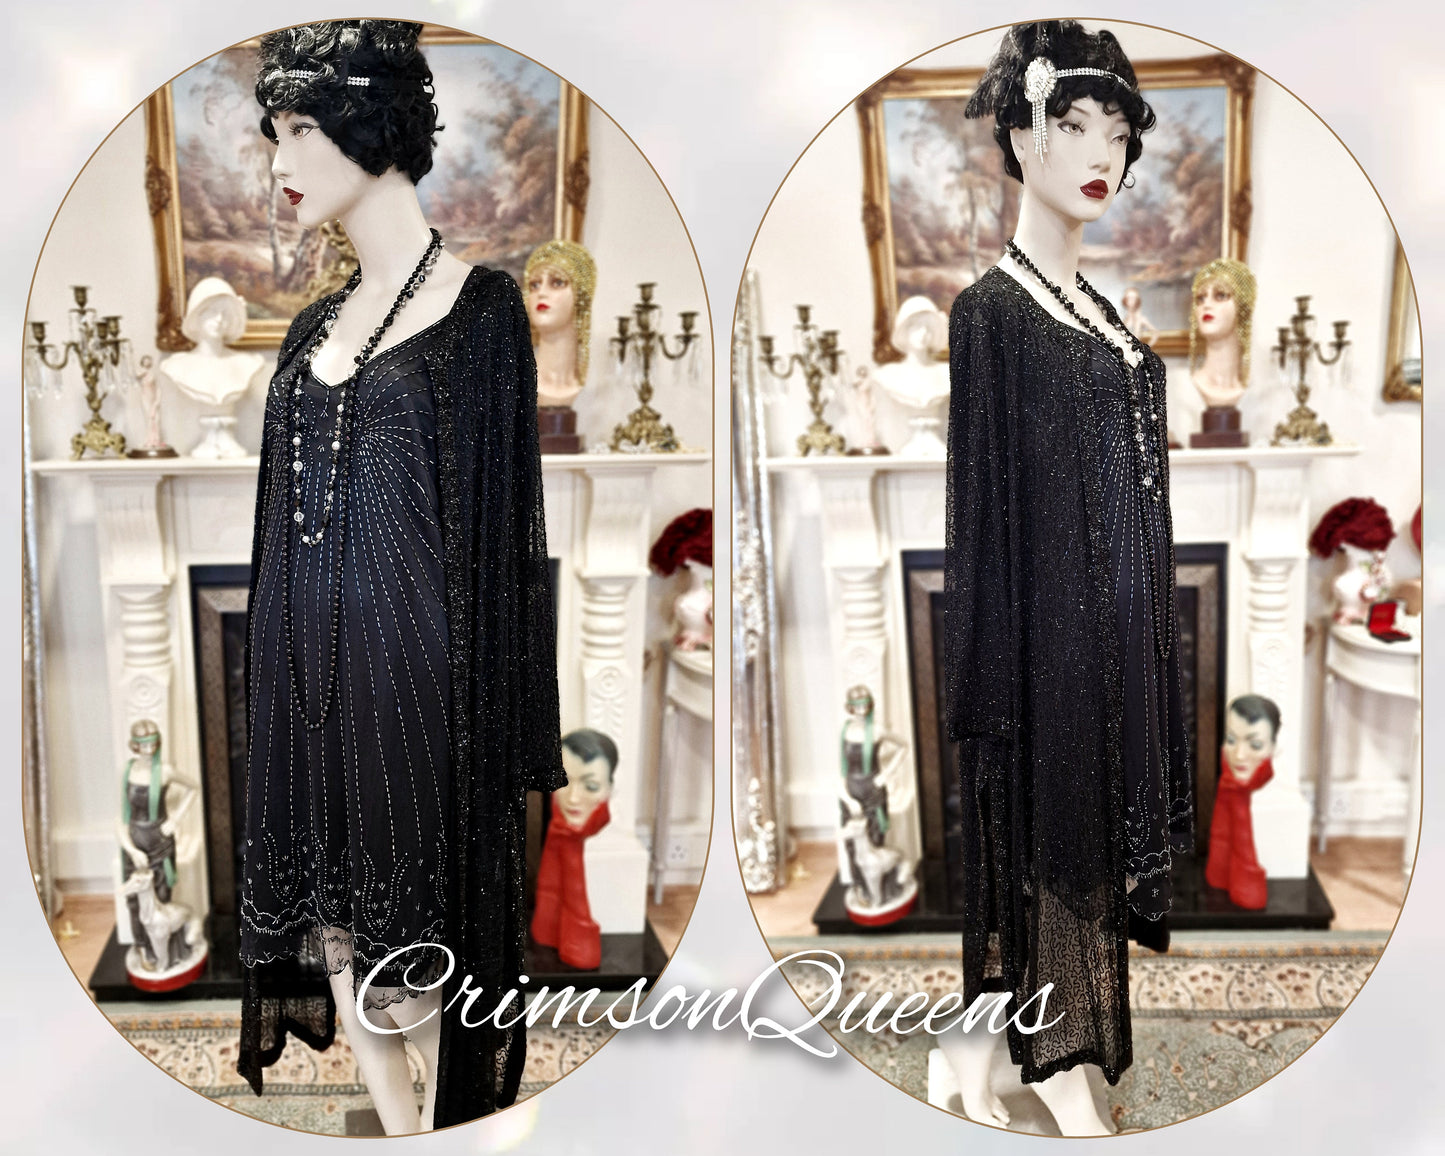 Vintage Downton Abbey Great Gatsby black beaded mesh dress 1920s flapper ensemble with Art Deco Hobb's beaded duster size UK 16 US 12